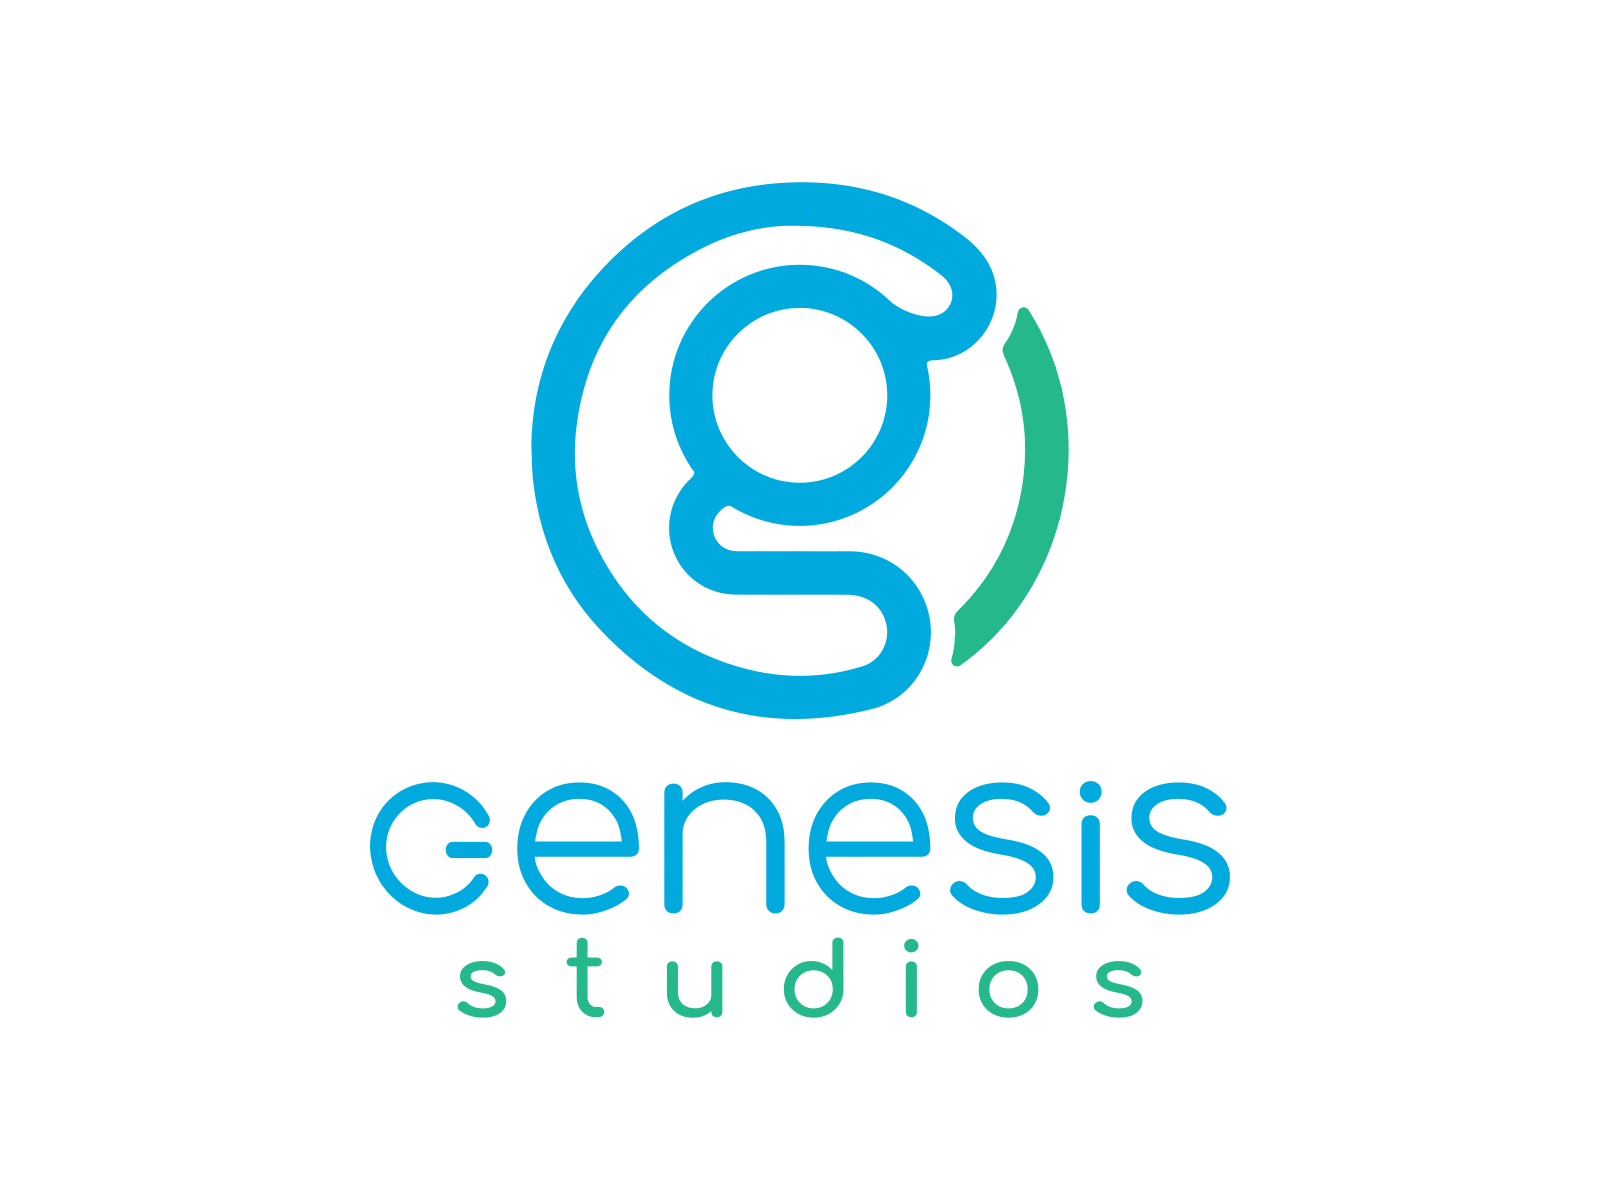 Genesis studios logo animation animated animation animation 2d design logo logo animation motion design motion graphics